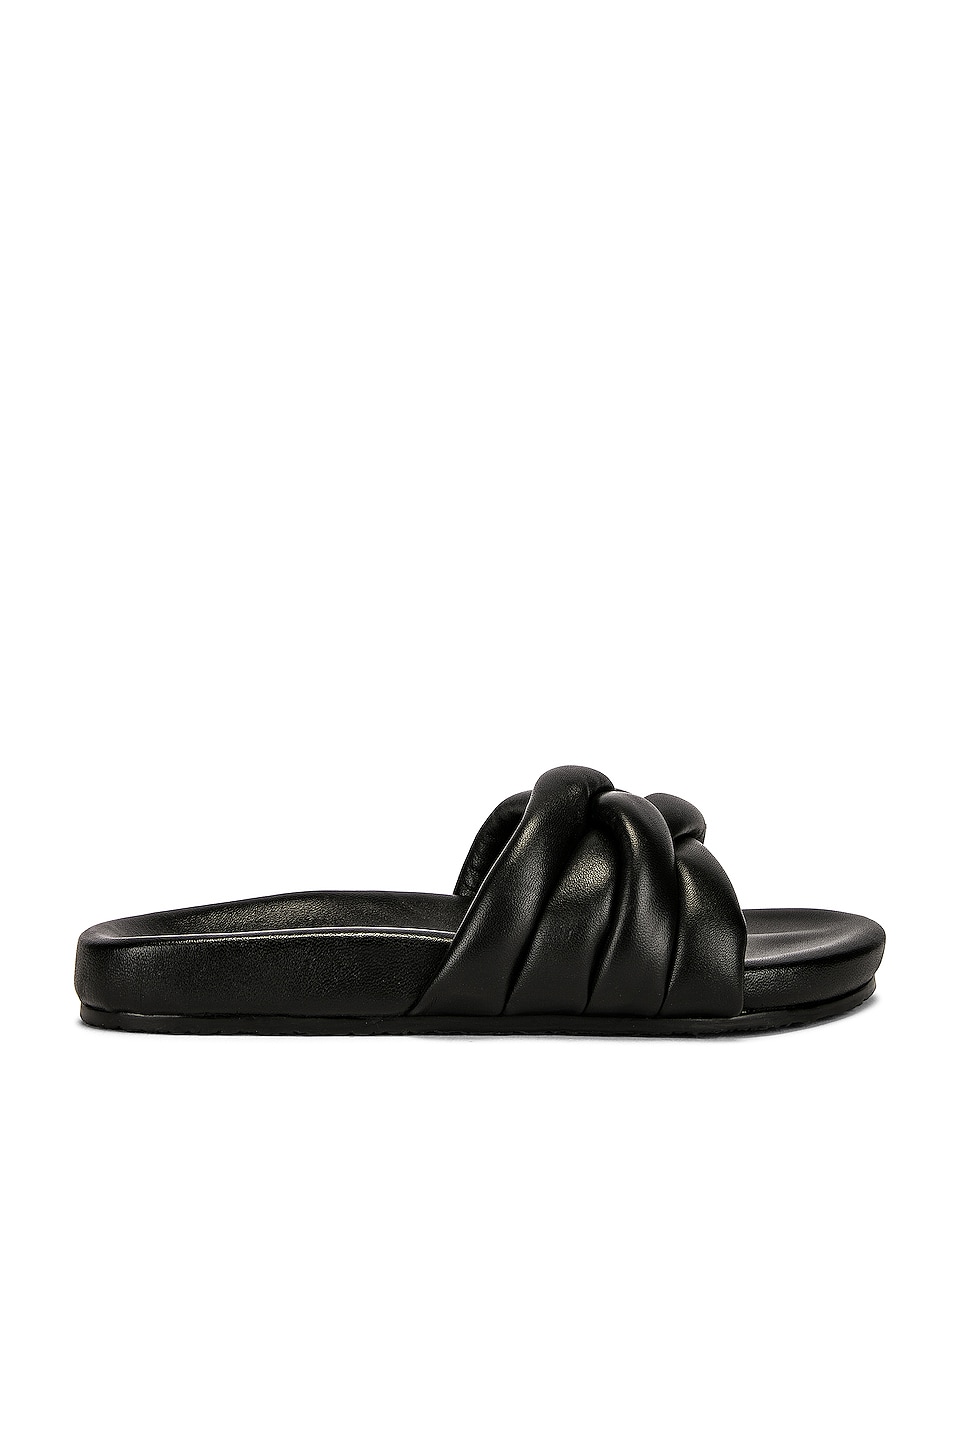 Seychelles Low Key Glow Up Sandal in Black Leather | REVOLVE